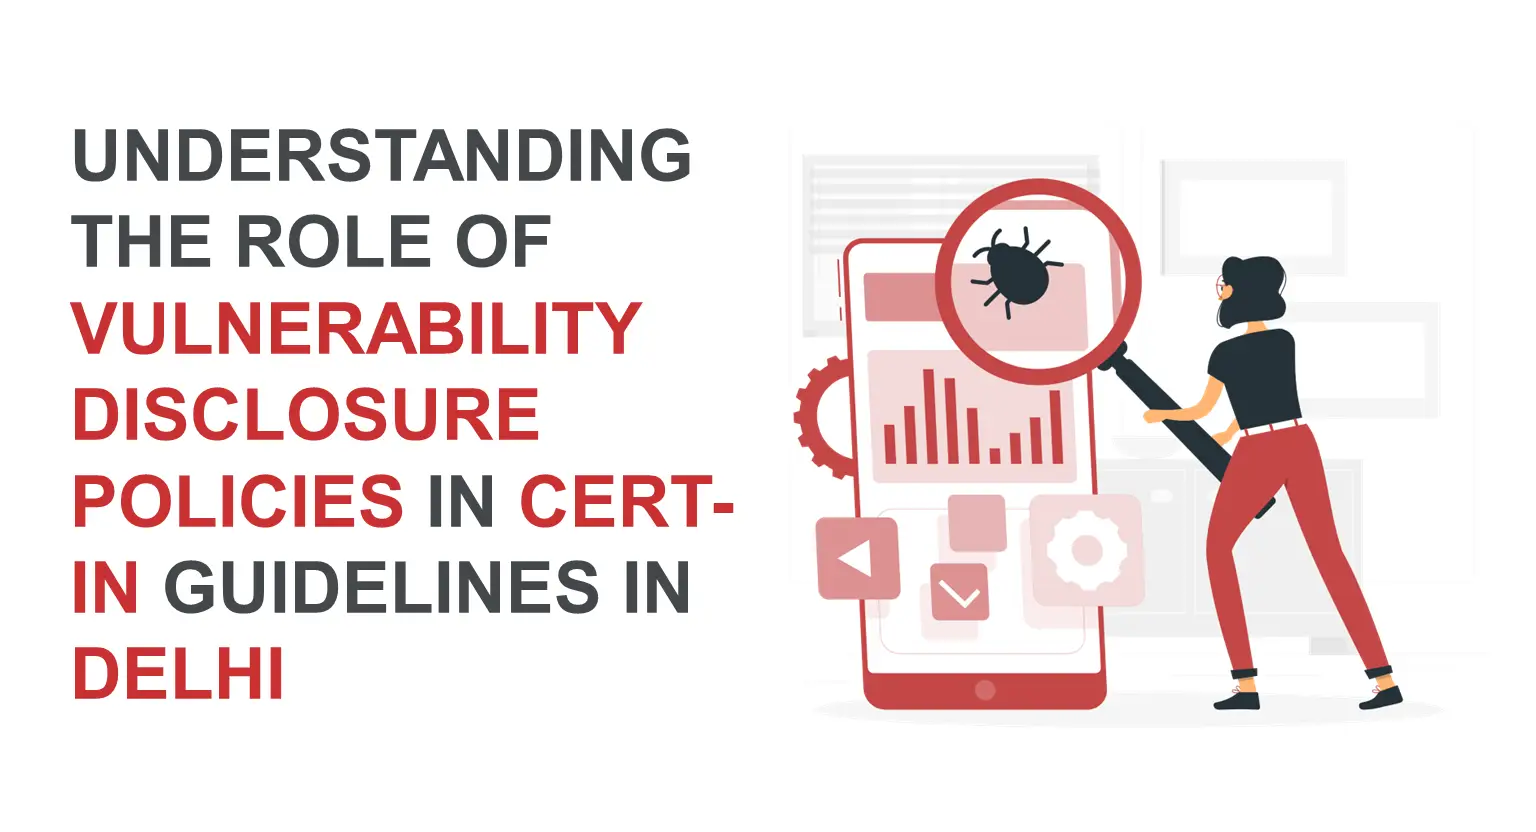 Understanding the role of vulnerability disclosure policies in CERT-In guidelines in Delhi